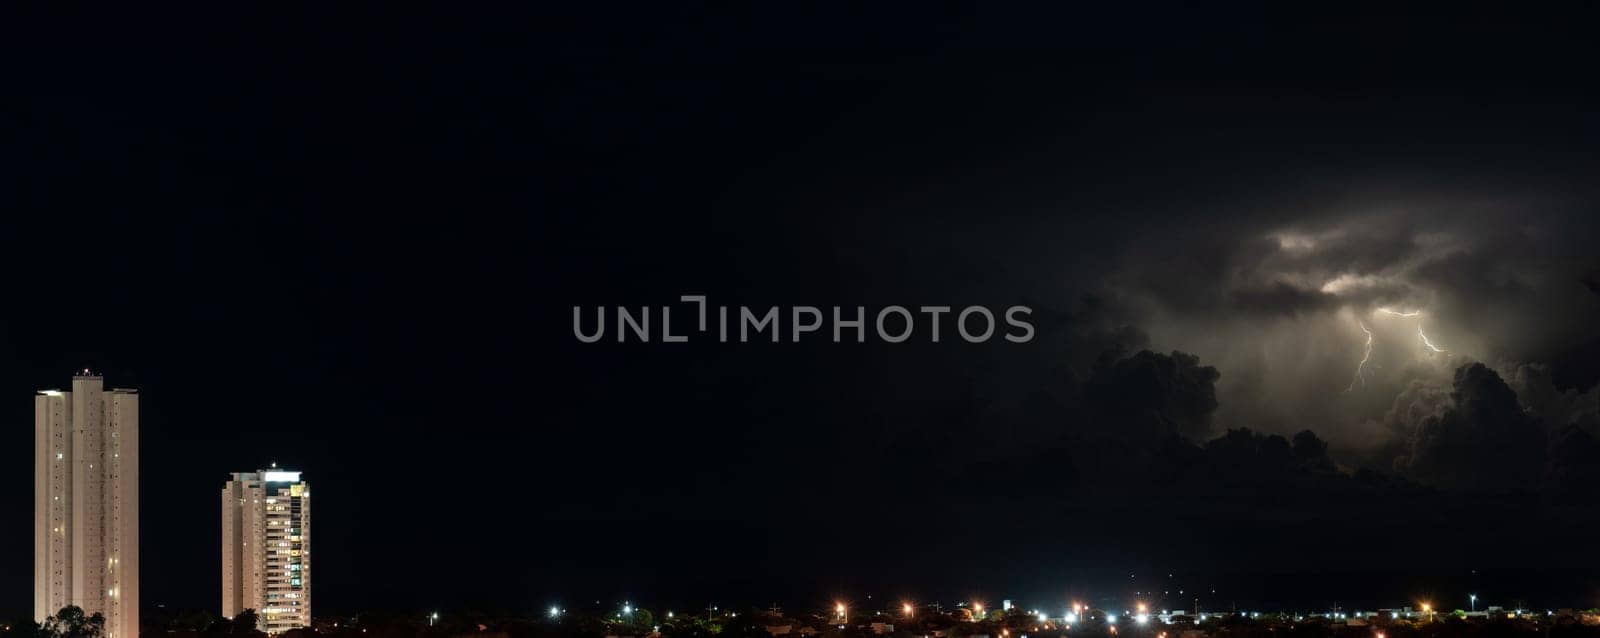 Majestic Skyscrapers Illuminated by Electric Storm in Dark Night by FerradalFCG